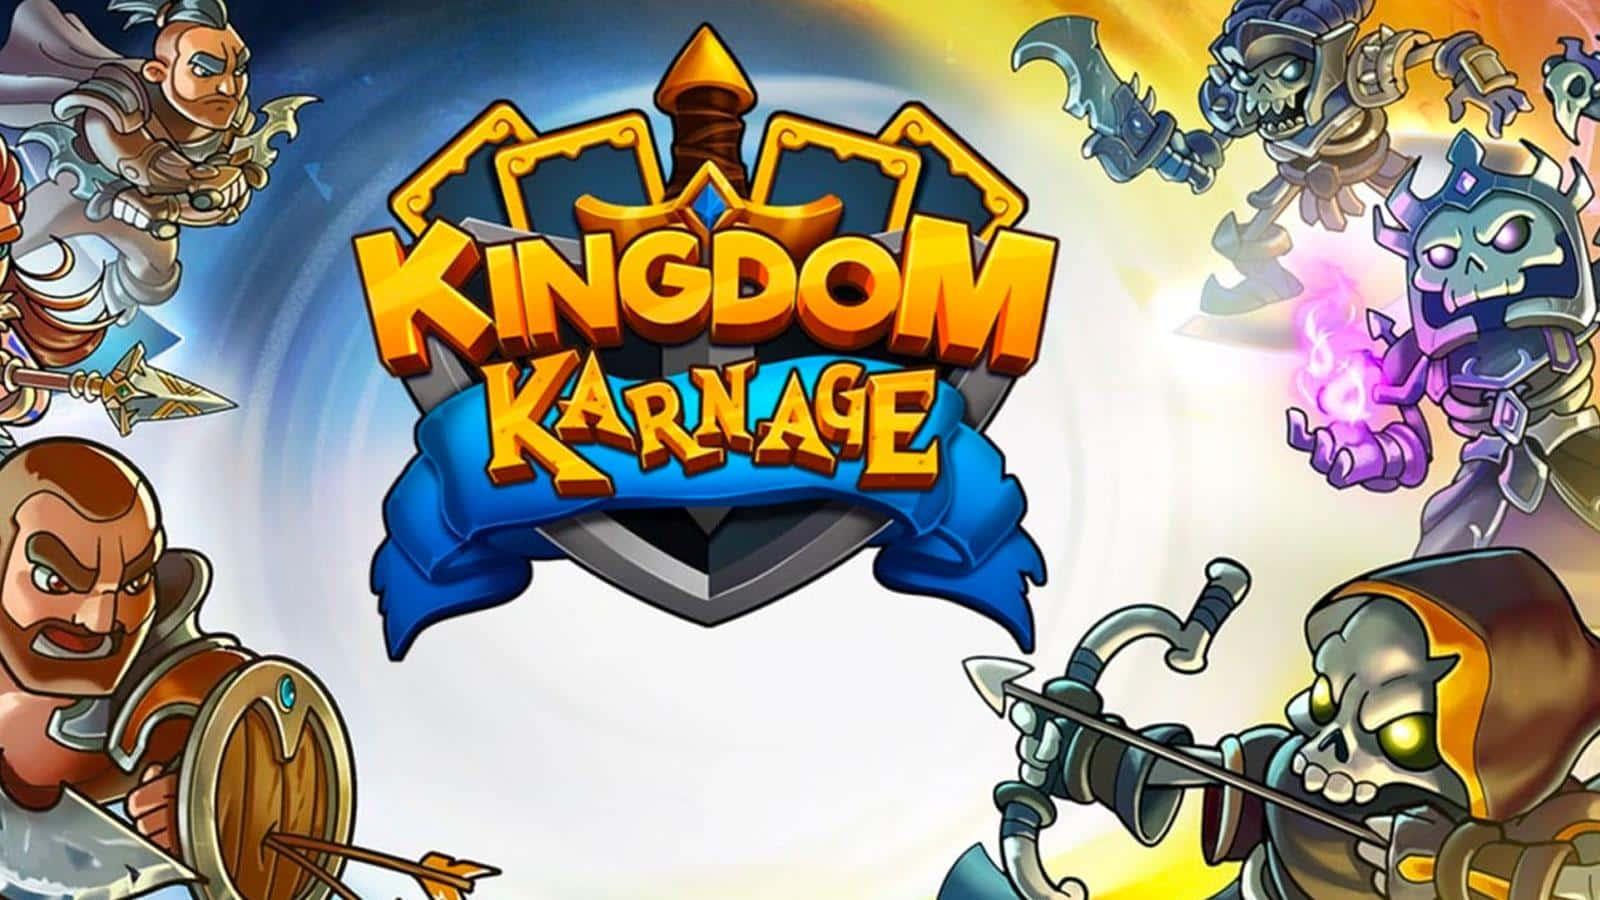 Kingdom Karnage - Game Review - Play Games